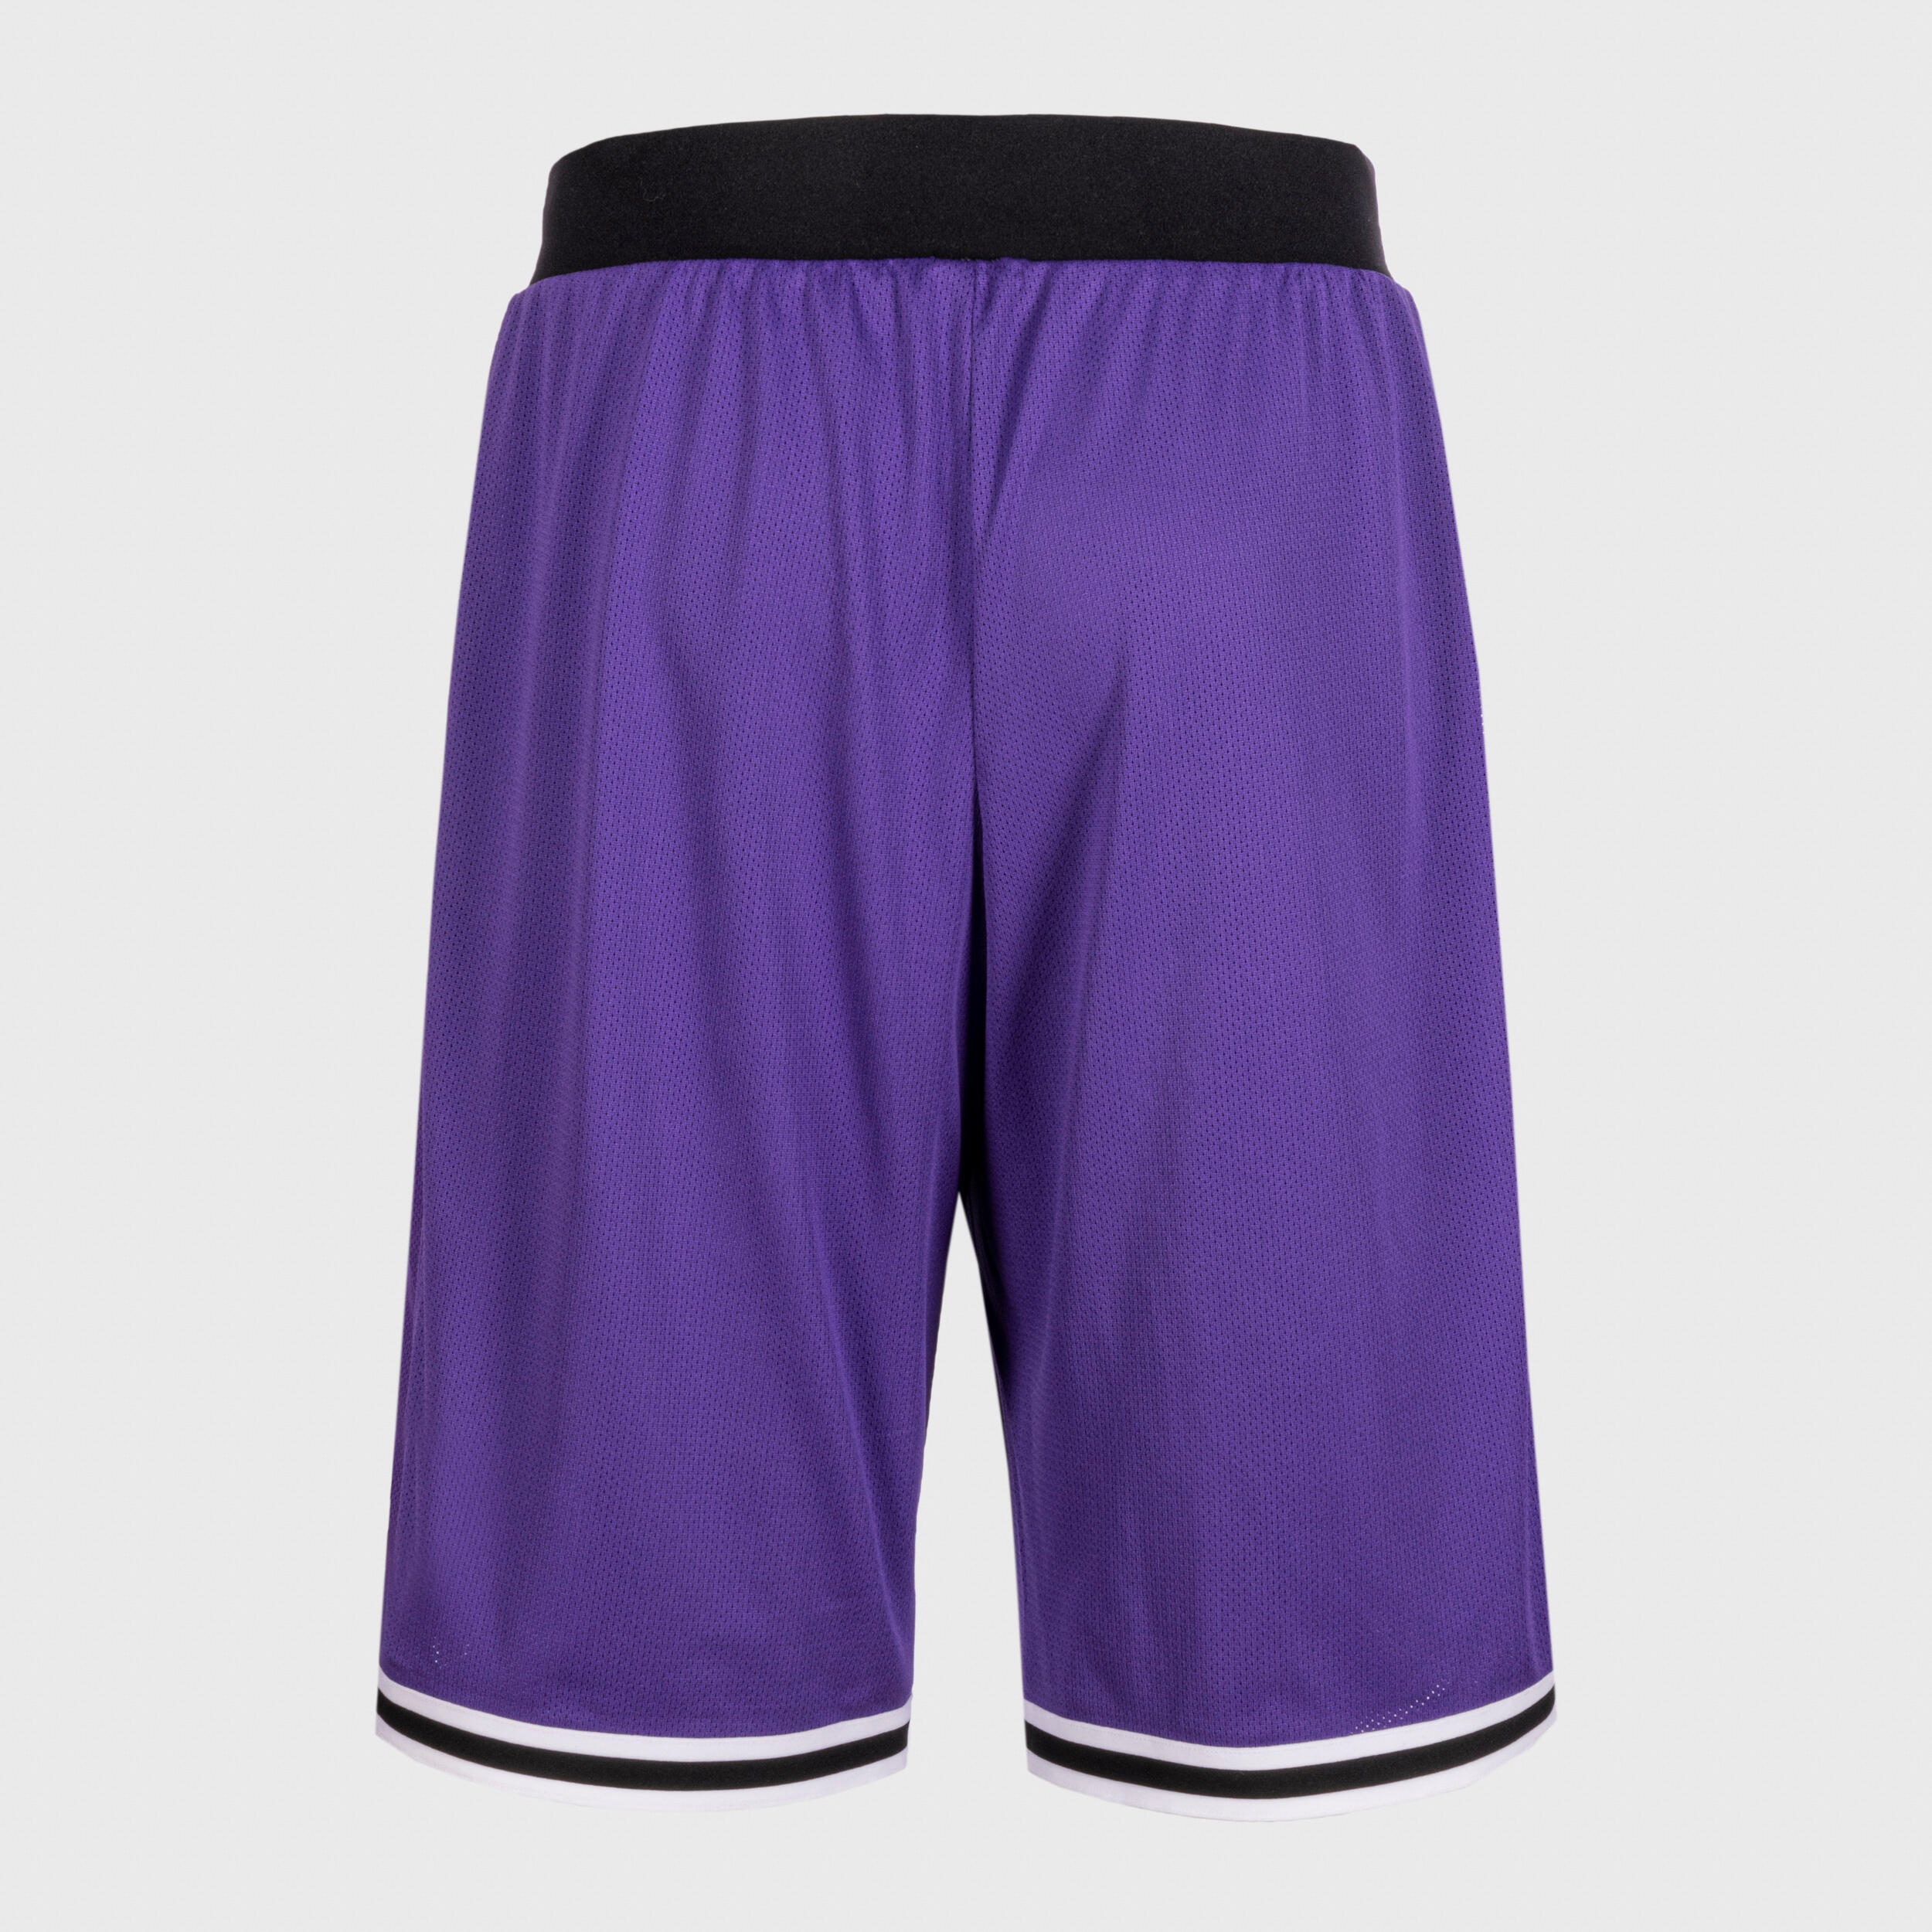 Men's/Women's Reversible Basketball Shorts SH500R - Purple/Lilac 9/11